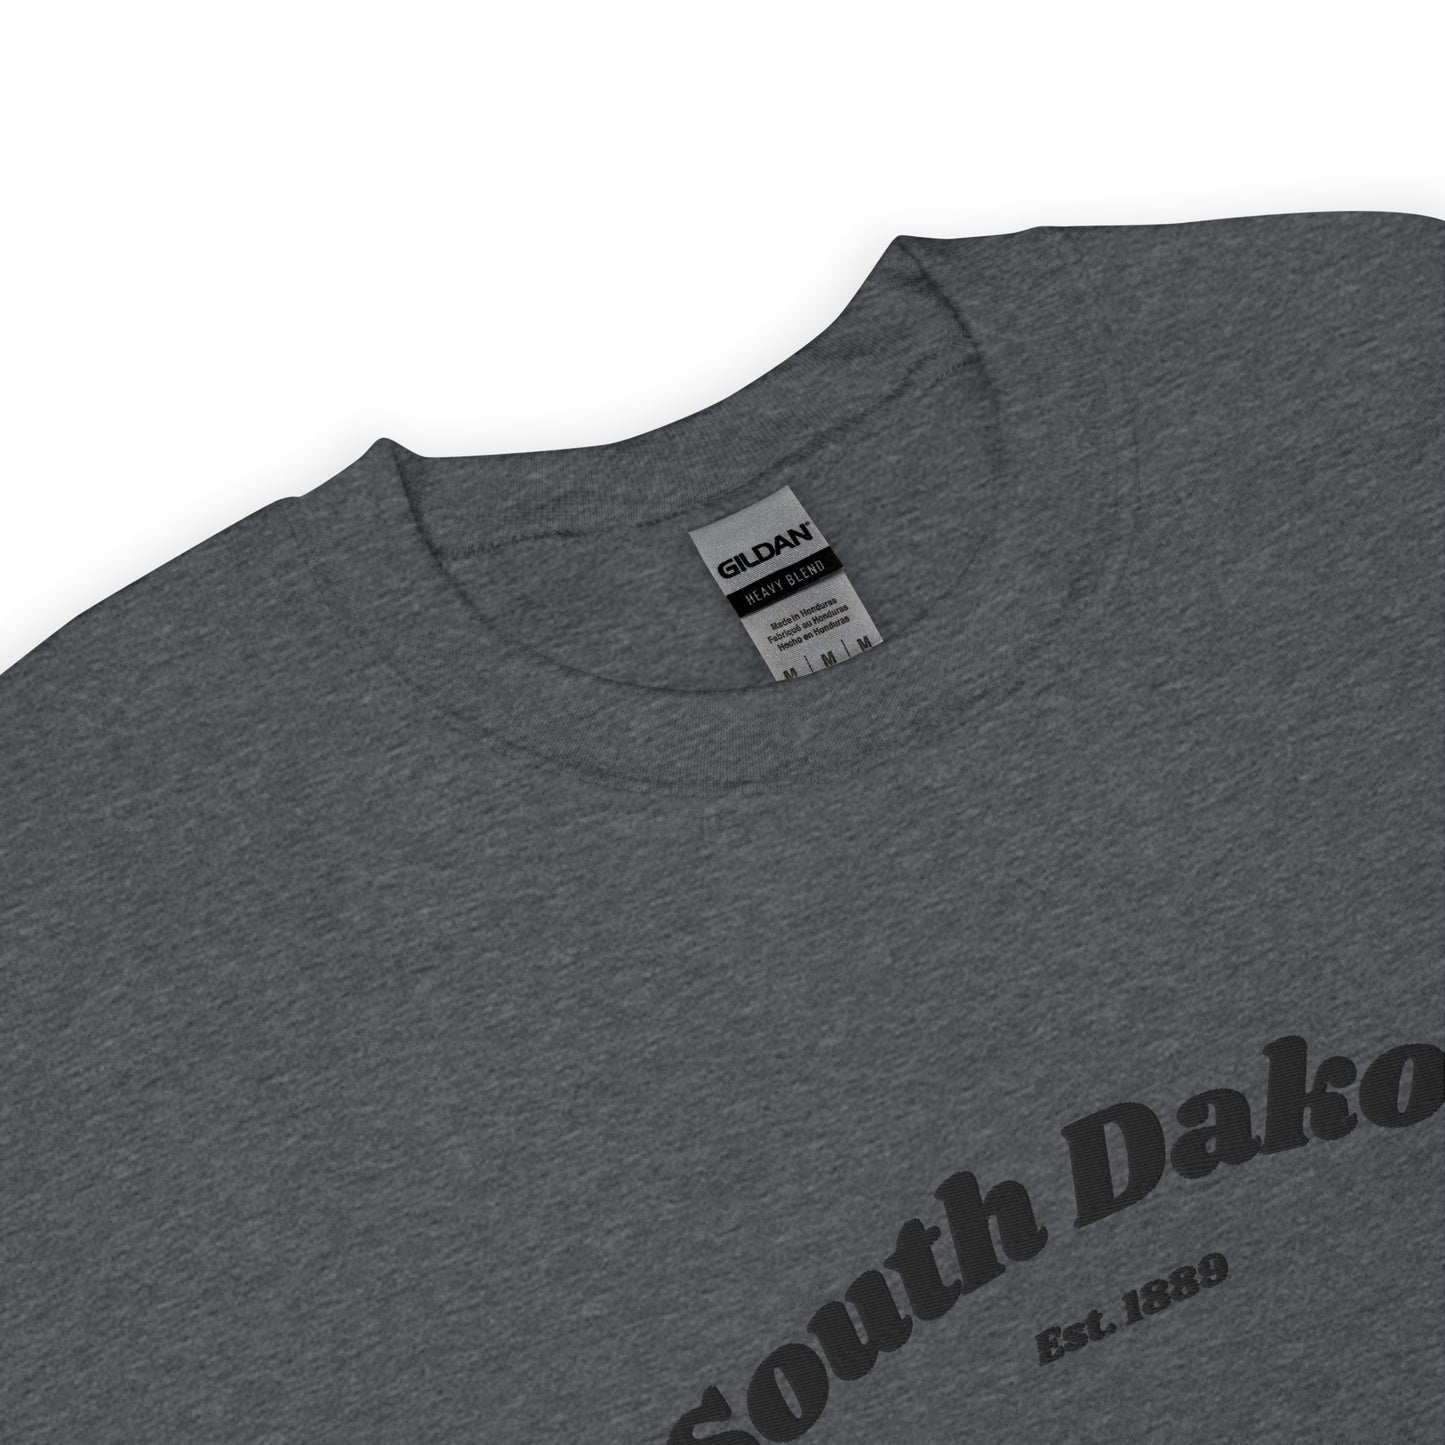 South Dakota 1889 Embroidered Sweatshirt